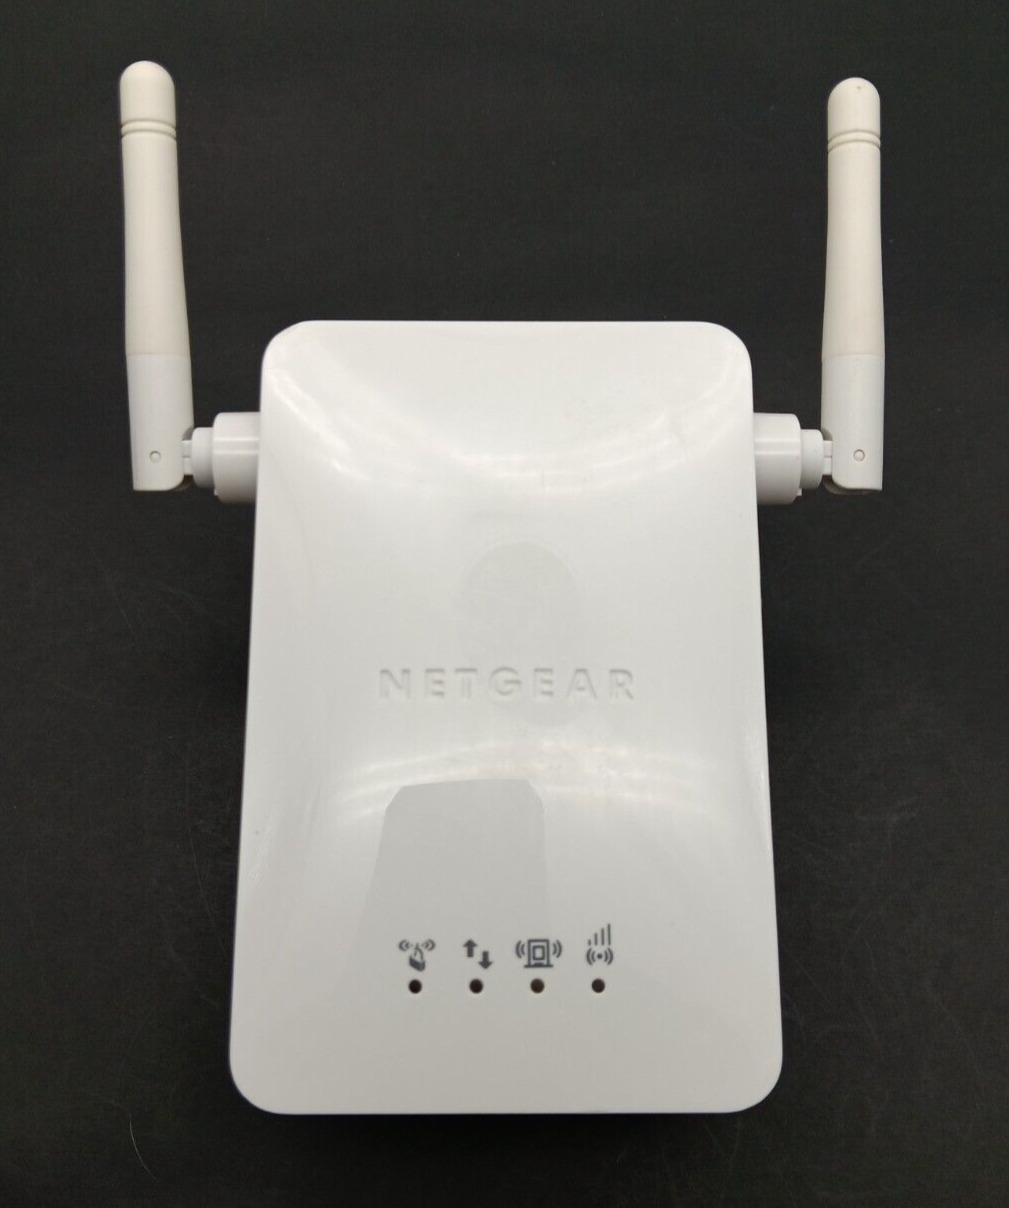 NETGEAR WN3000RP Universal WiFi Range Extender